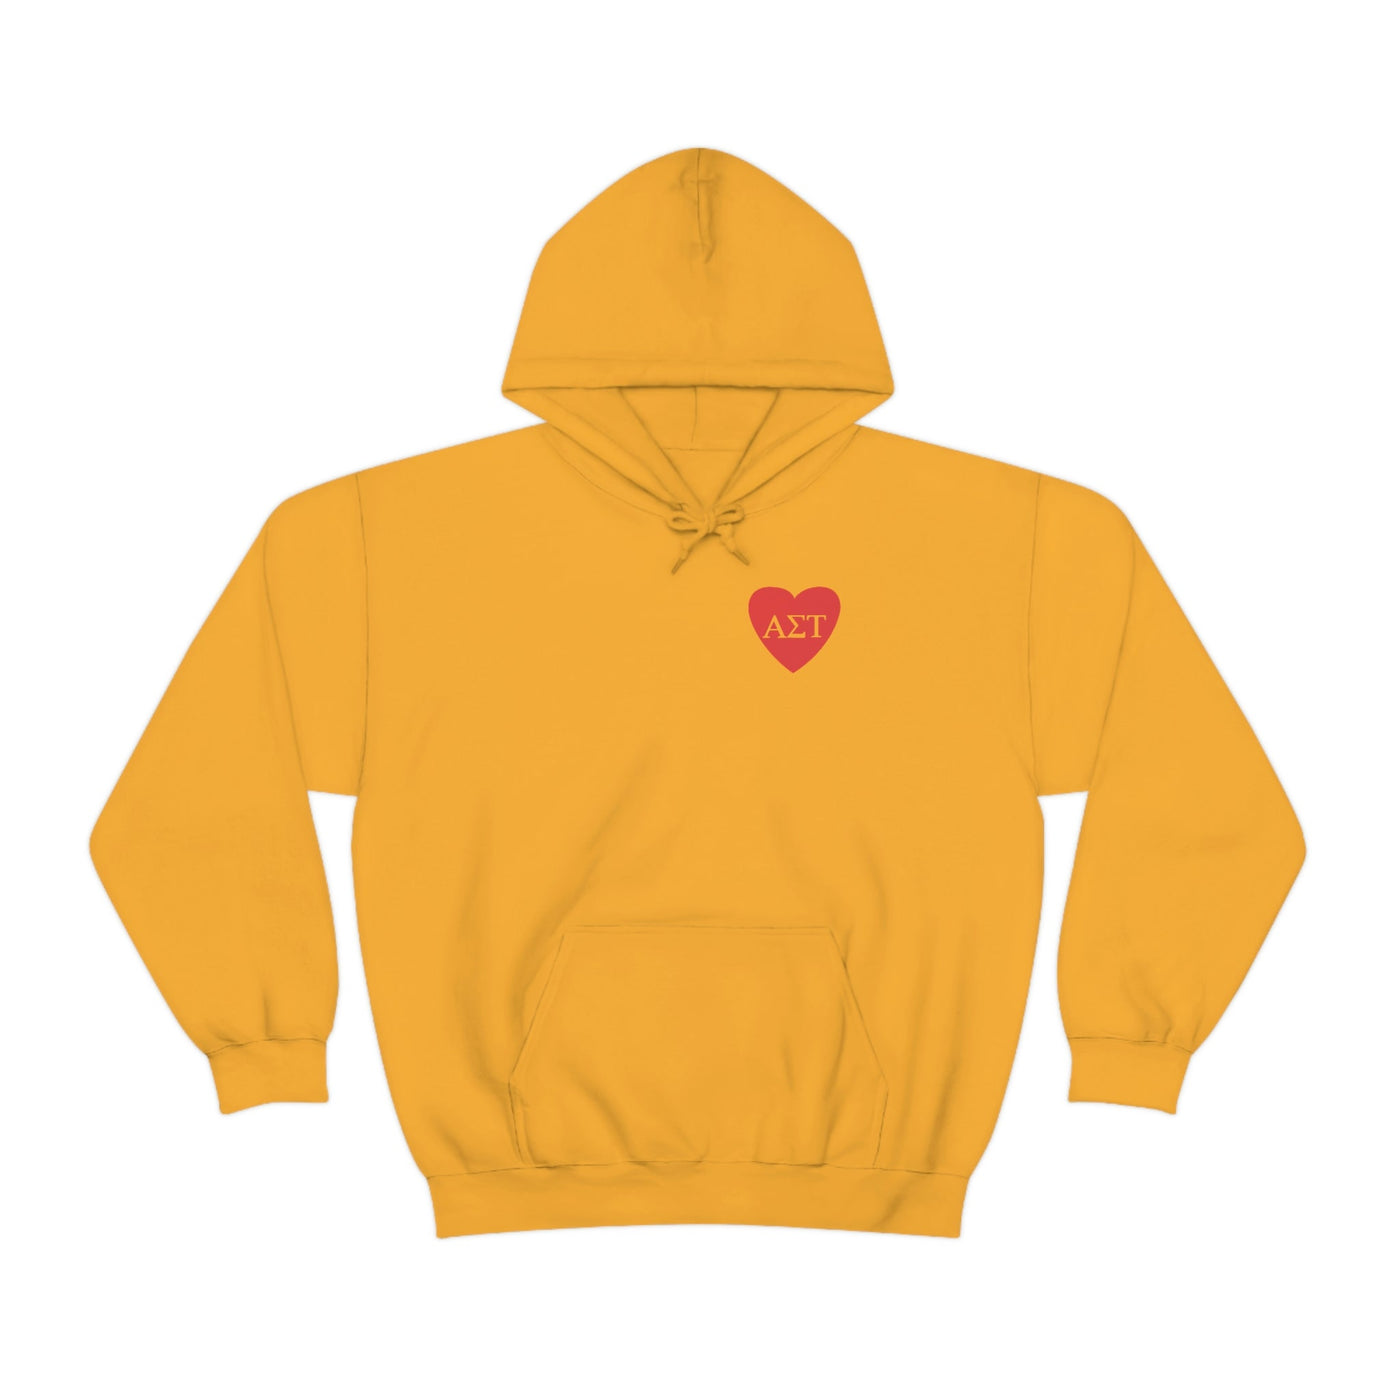 I Love Alpha Sigma Tau Sorority Sweatshirt | Trendy Custom Sorority Hoodie